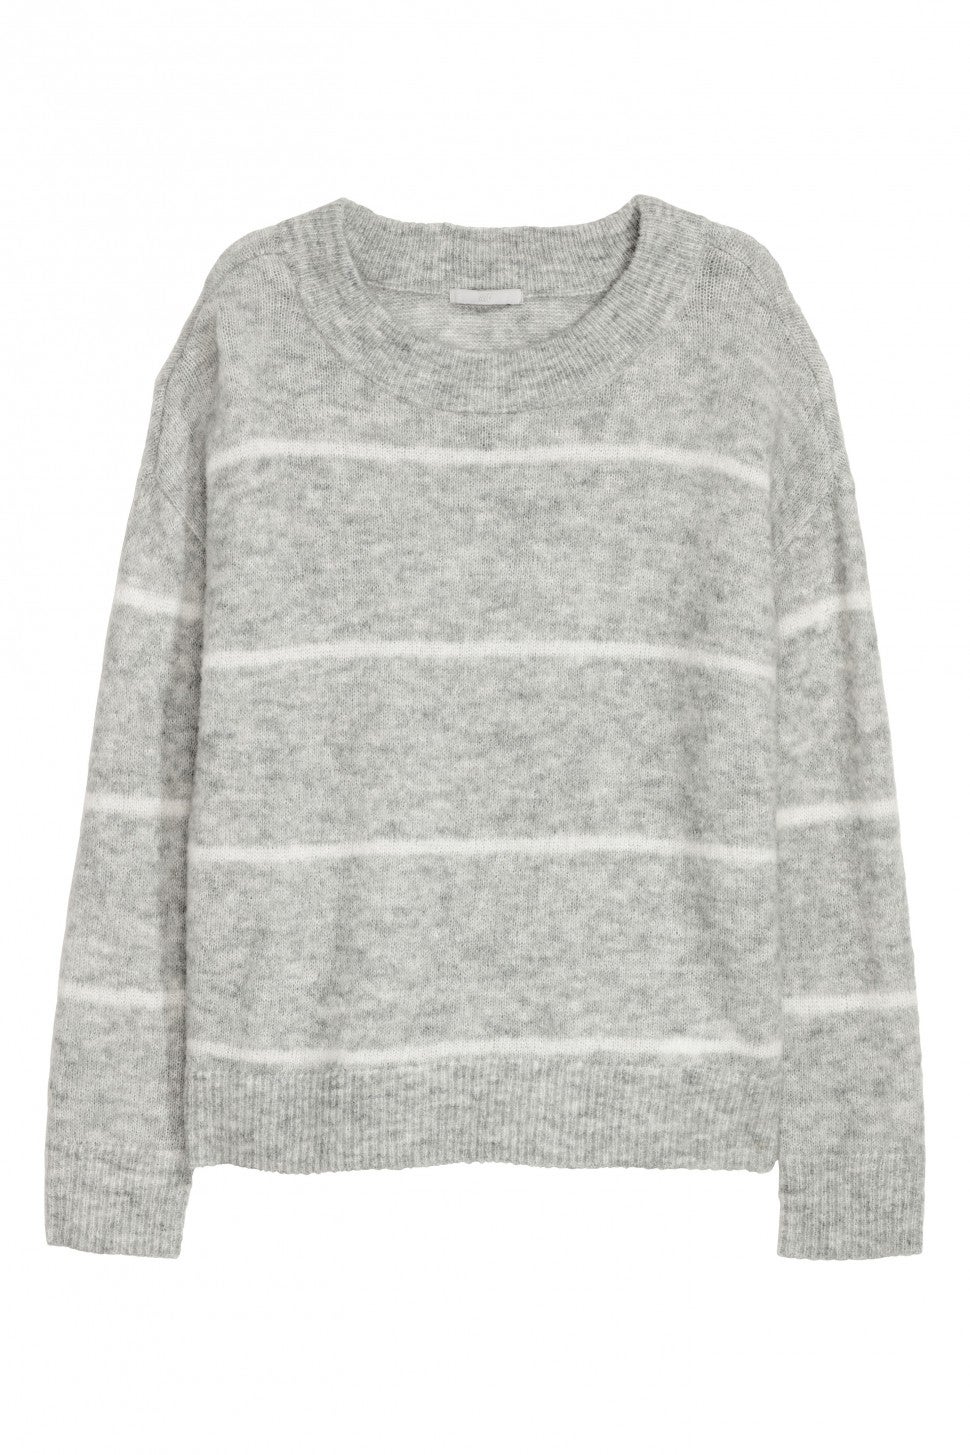 H&M gray striped sweater